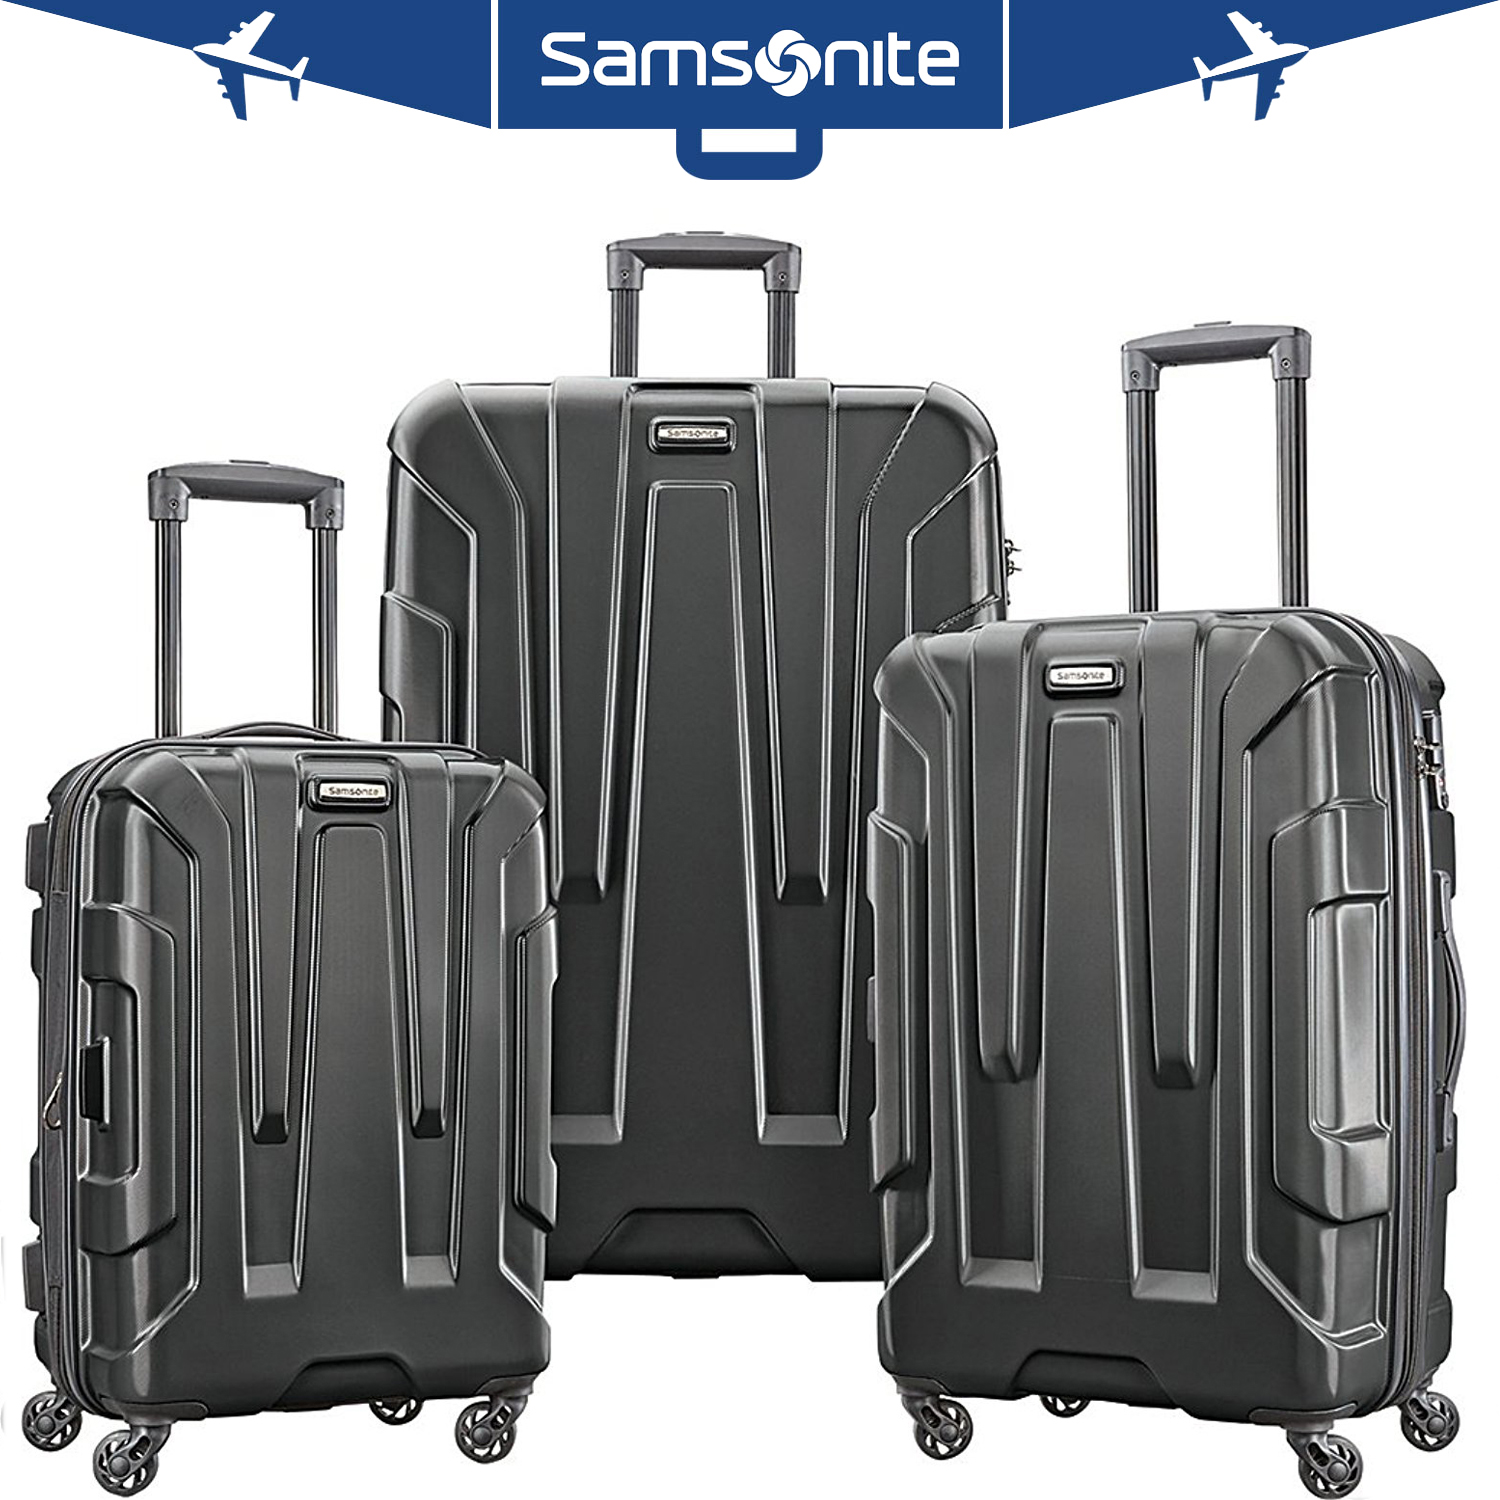 Samsonite Centric 3 Piece Hardside Suitcase Spinner Luggage Set Choose Color Ebay